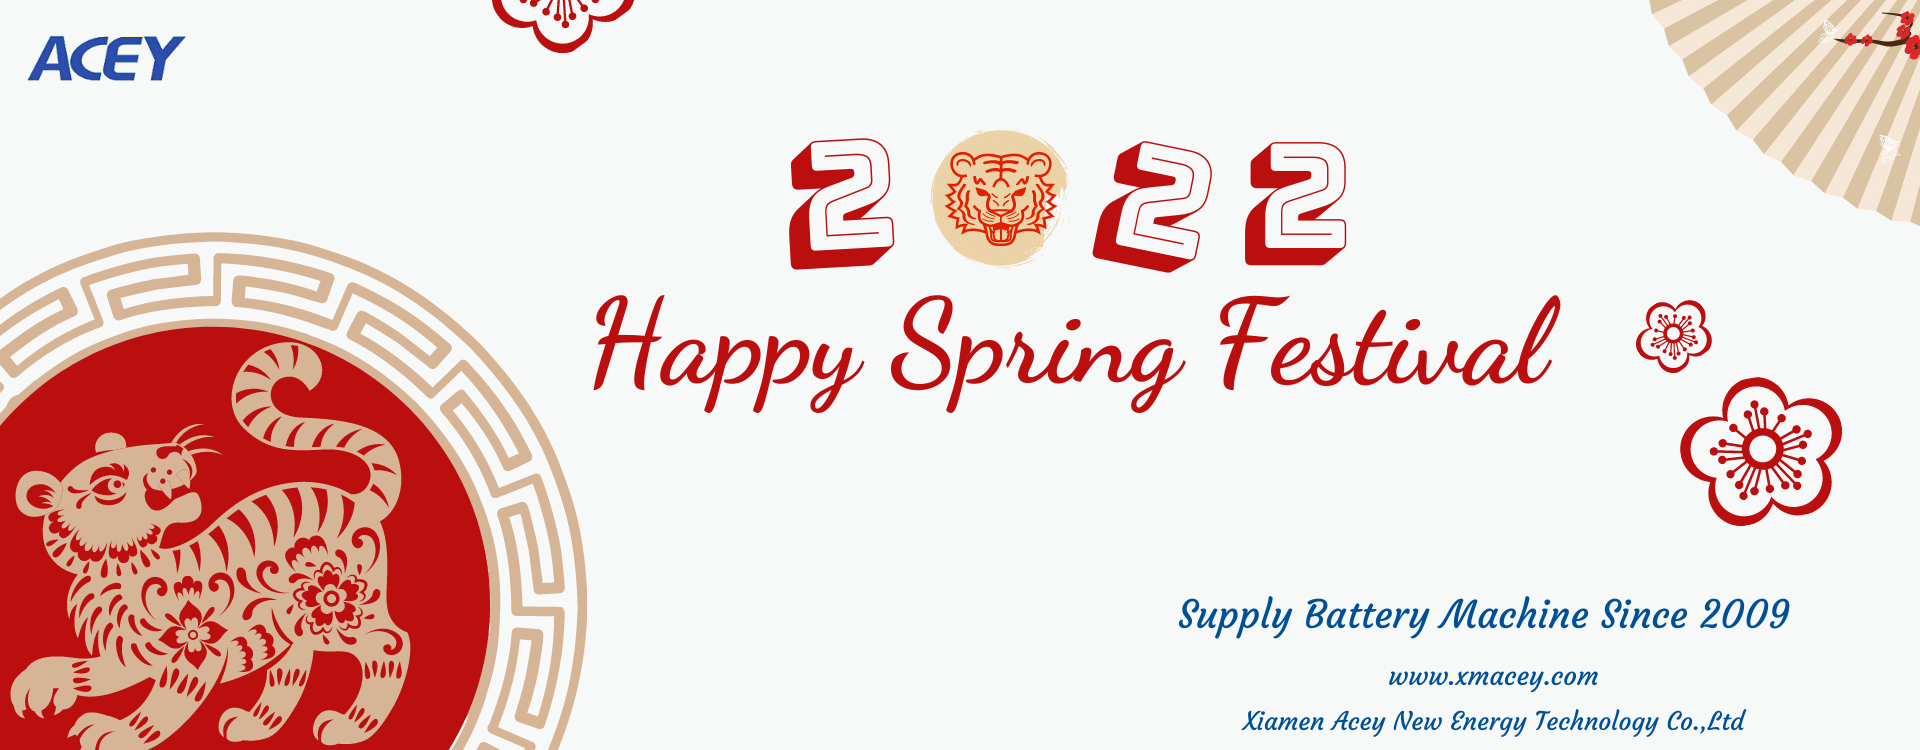 Spring Festival notice